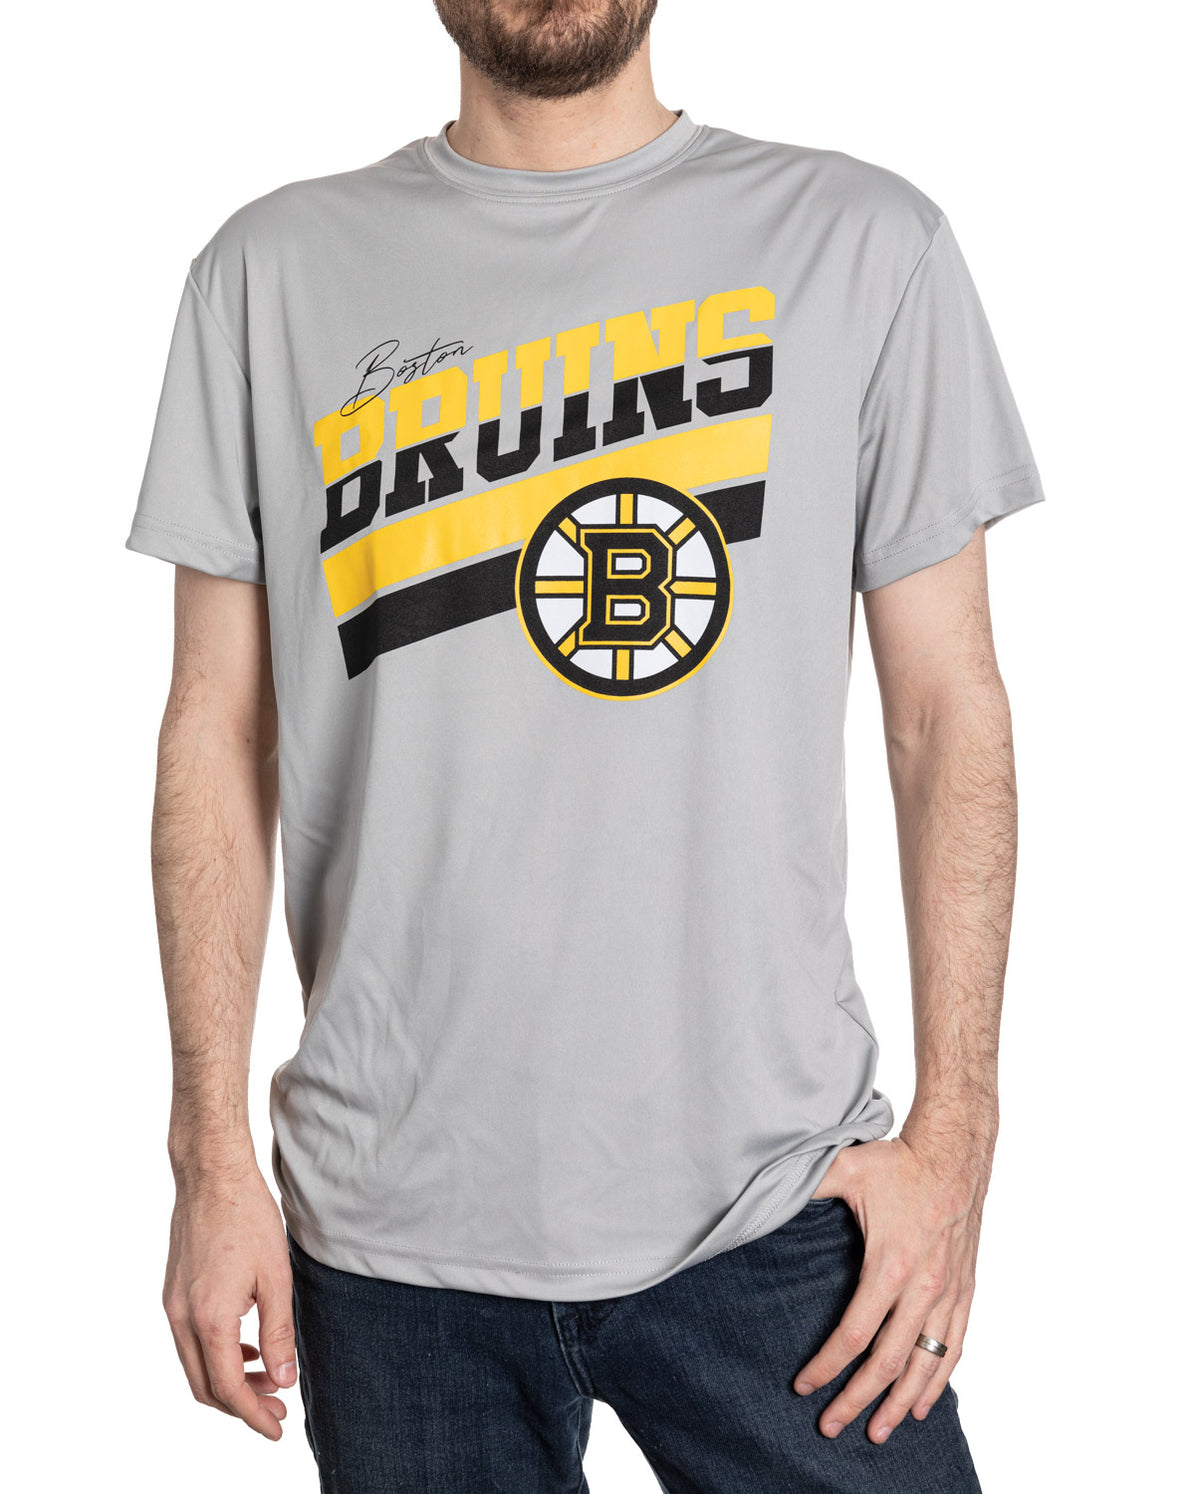 Boston Bruins Men's Short Sleeve "Stripes" Rash Guard Wicking T-Shirt